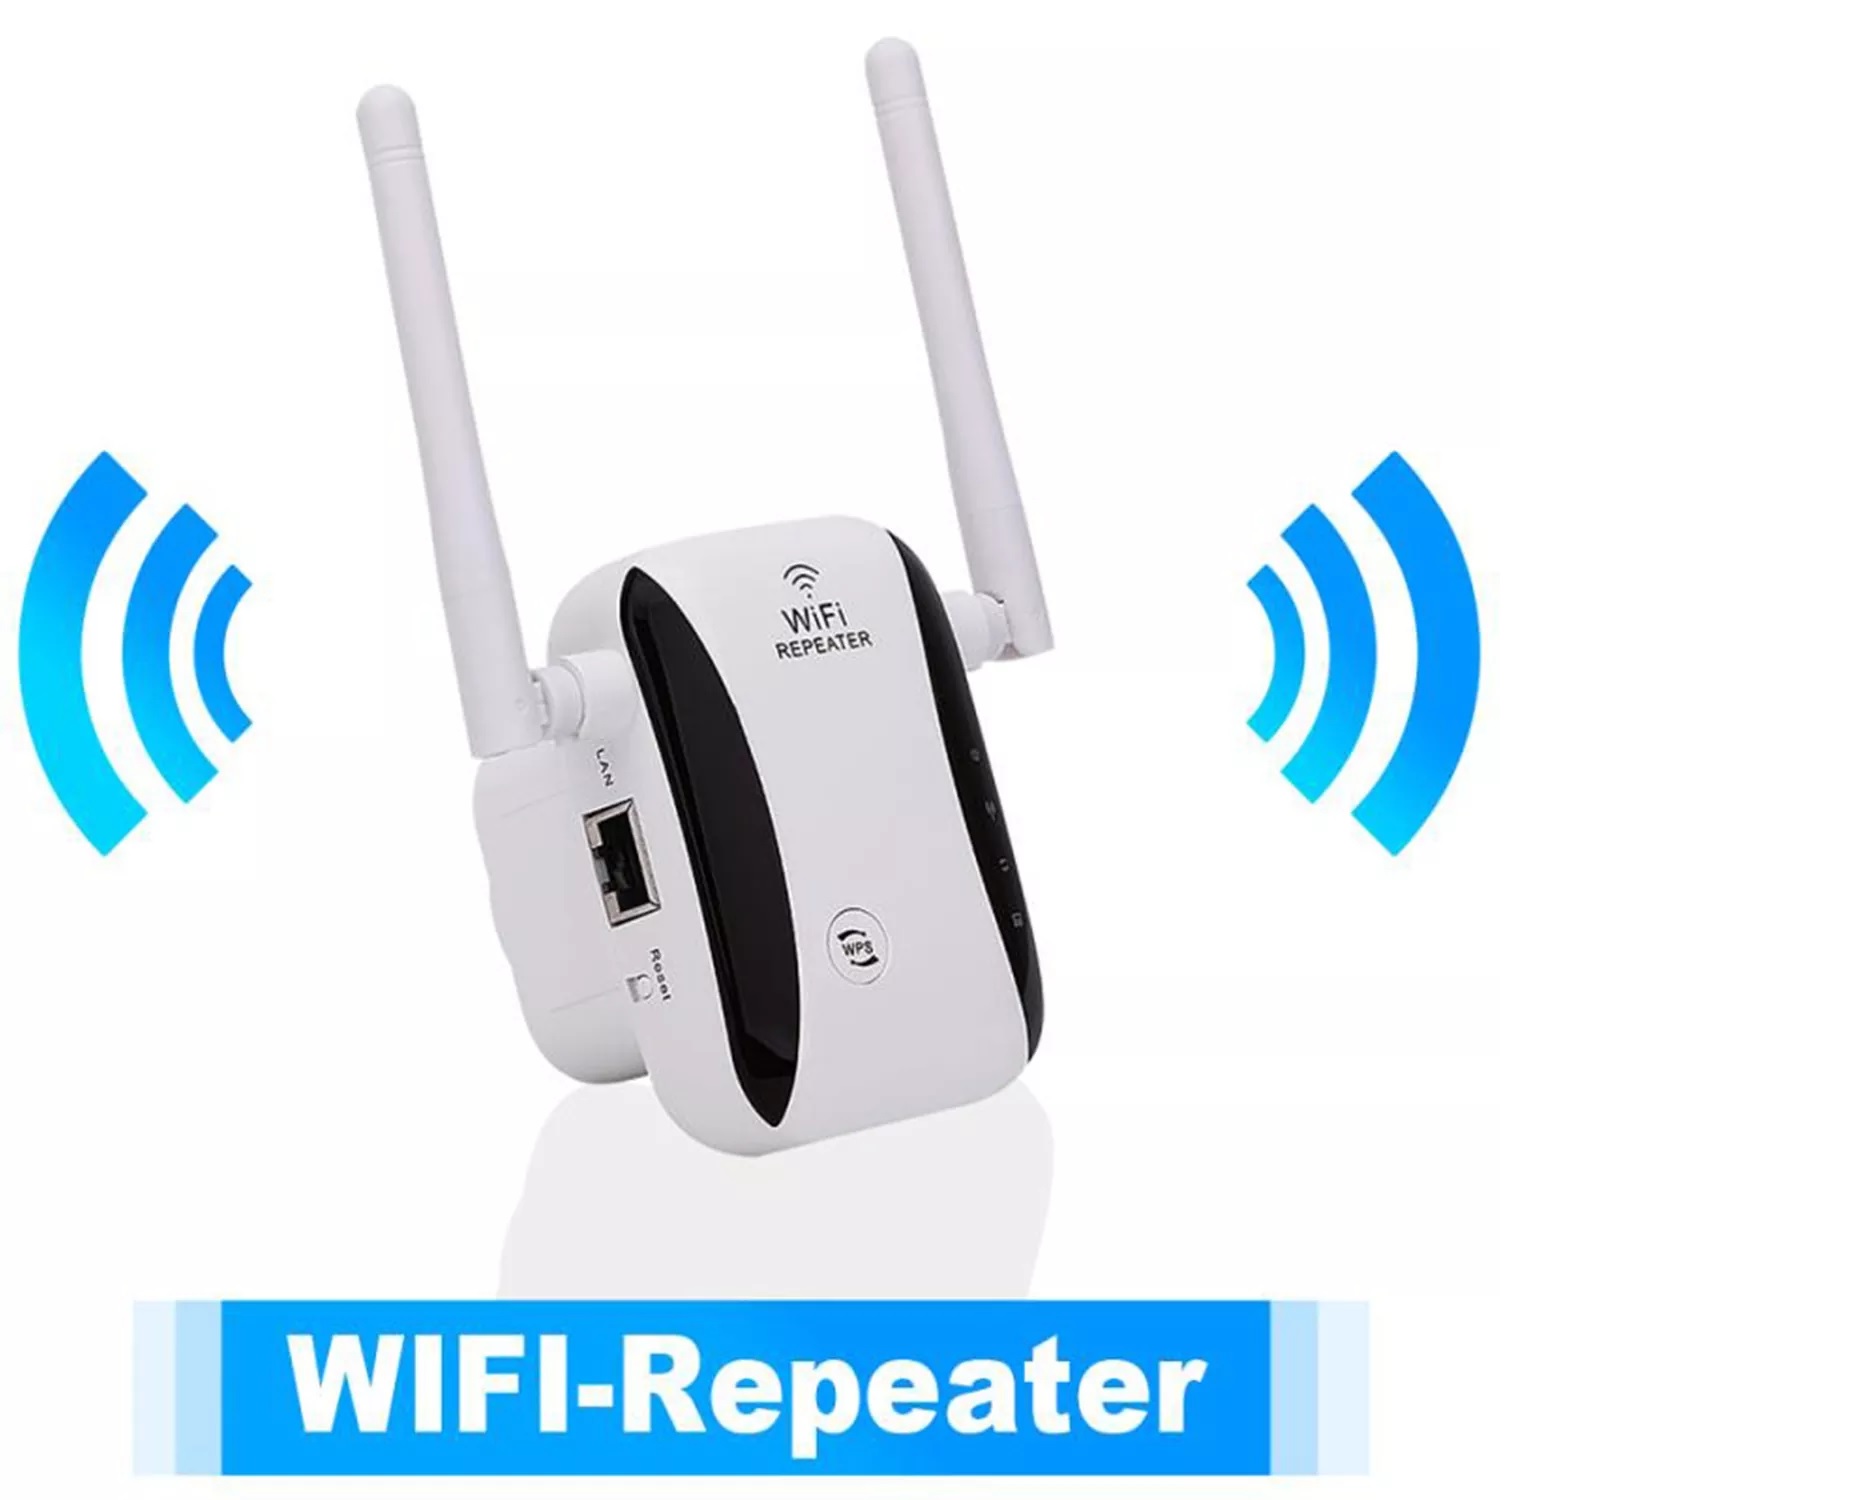 Wi-Fi extender